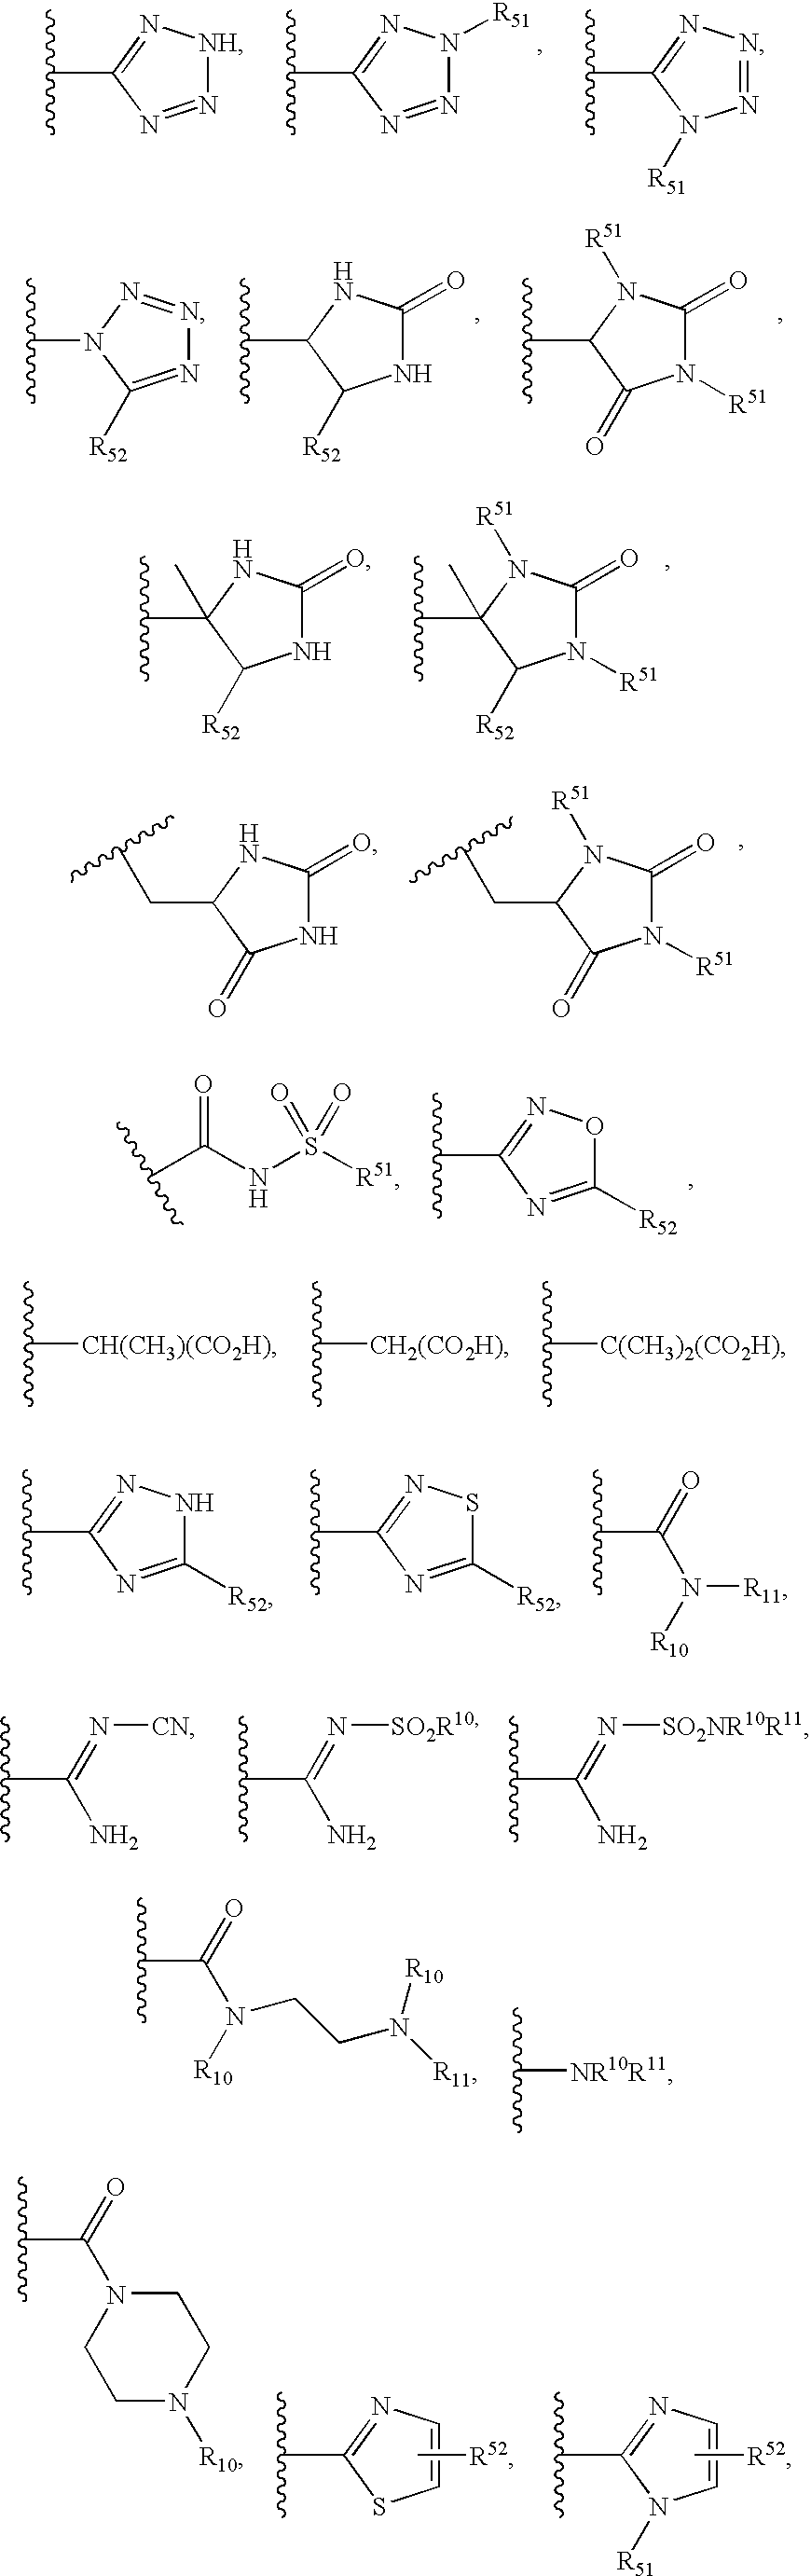 Heterobicyclic metalloprotease inhibitors